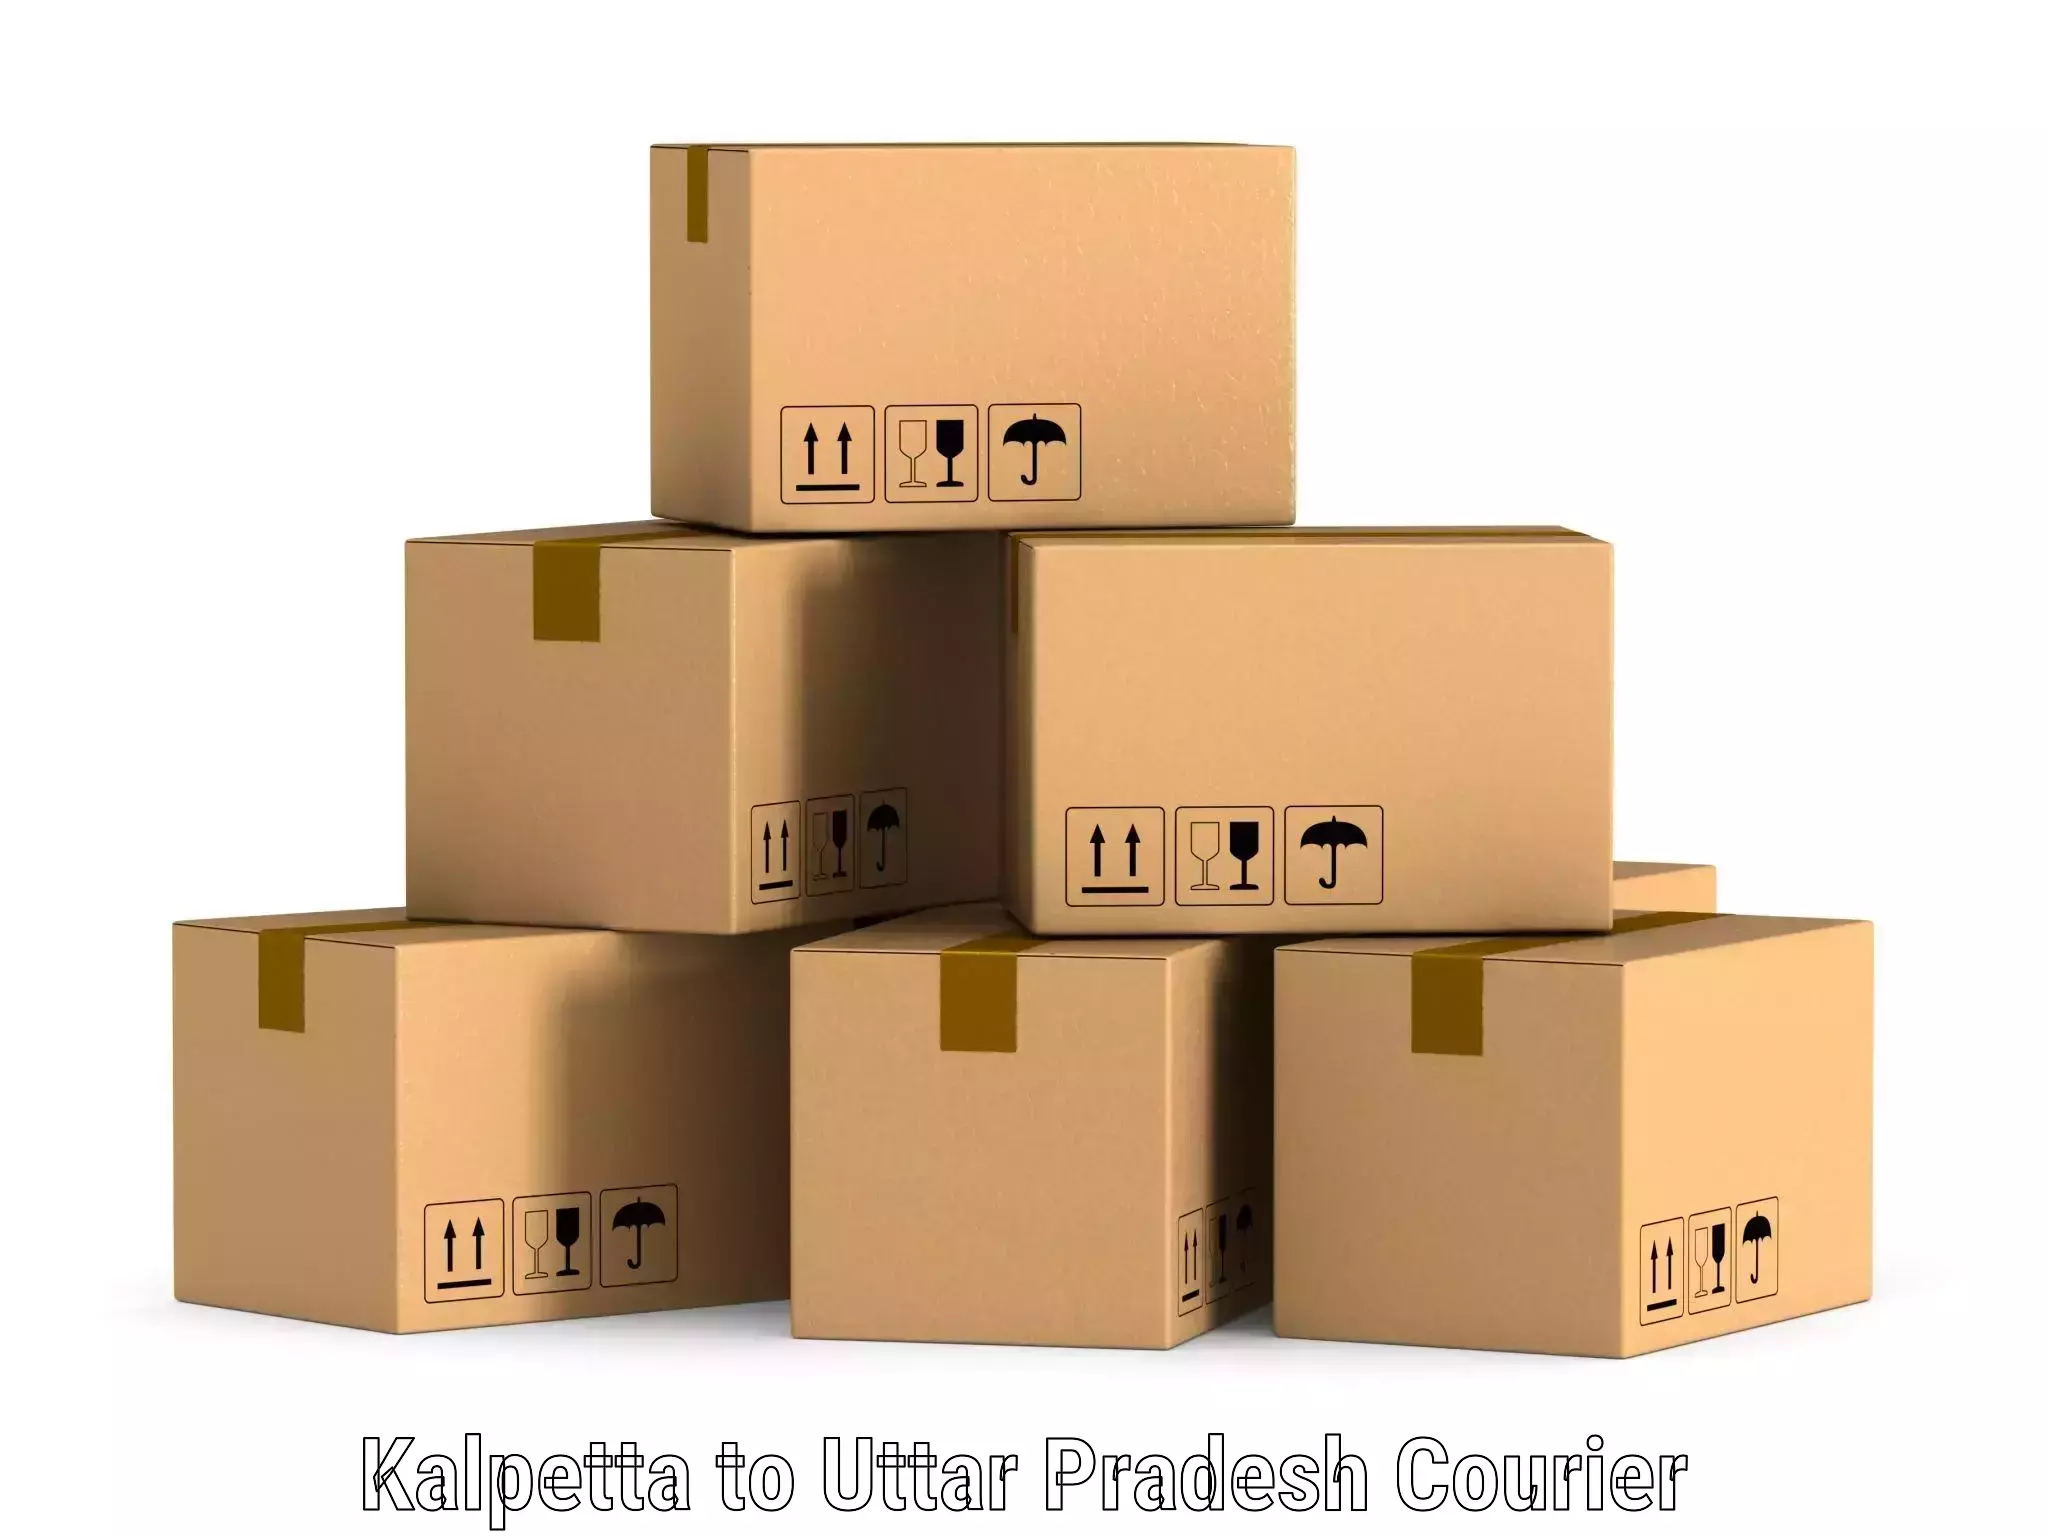 Package delivery network Kalpetta to Uttar Pradesh